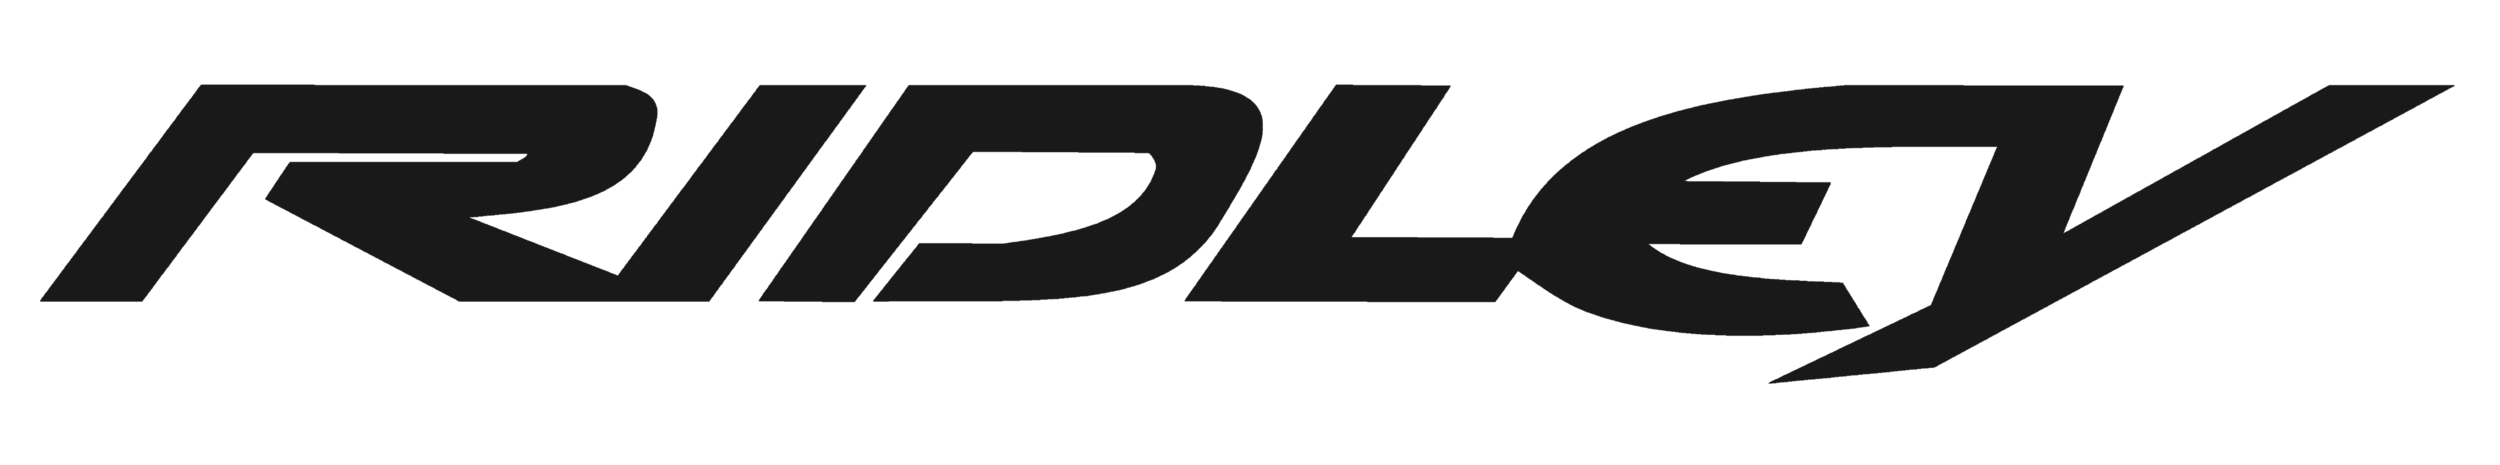 Ridley-logo.png